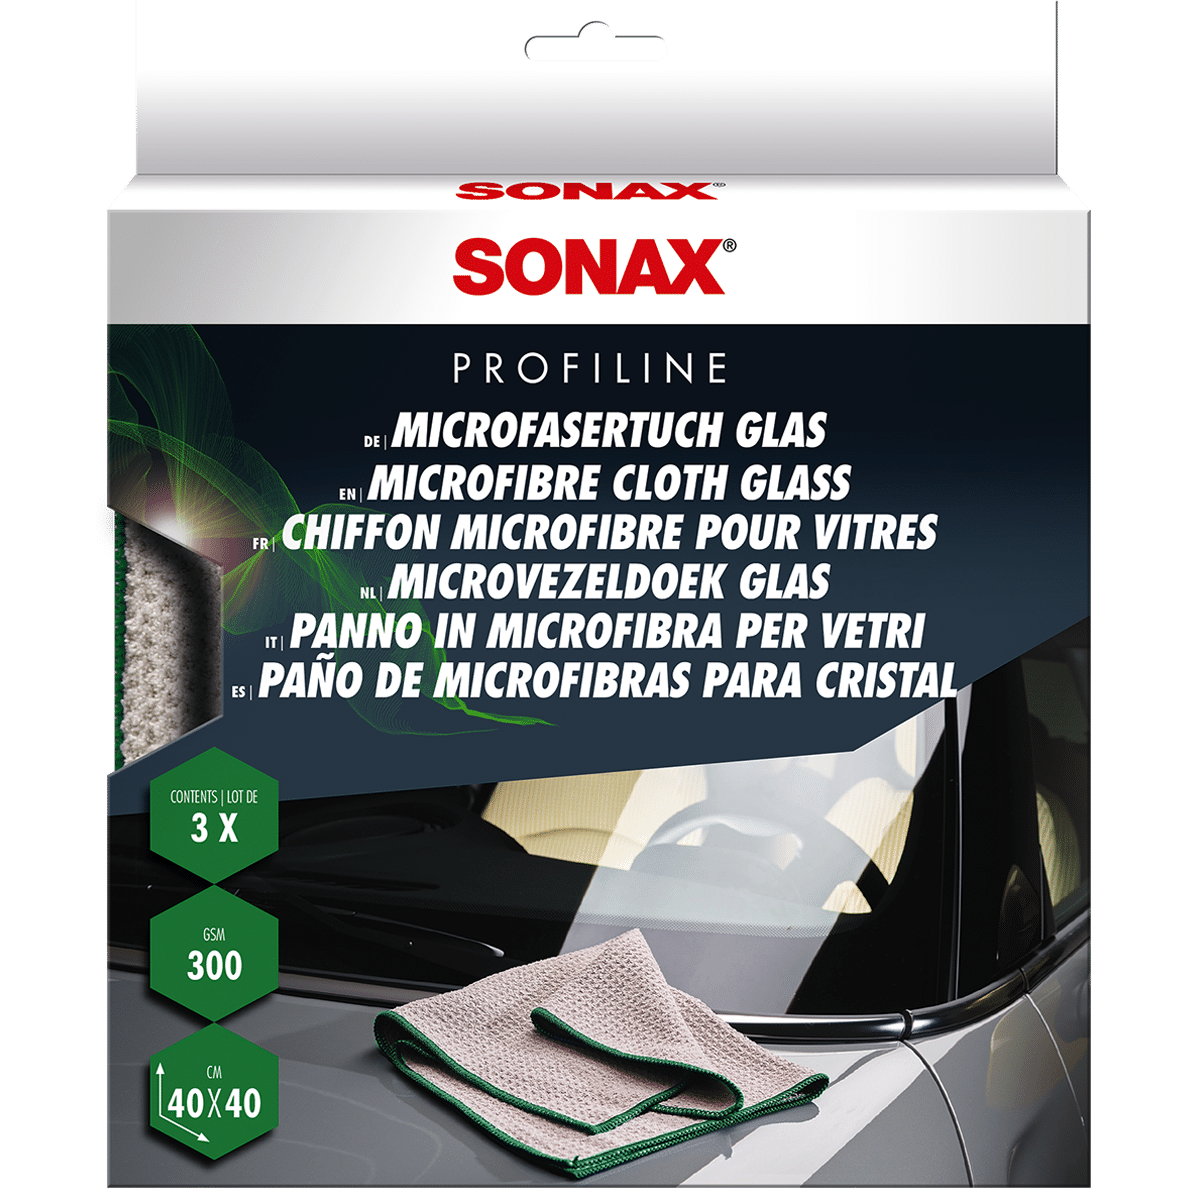 Sonax Microfasertuch Glas